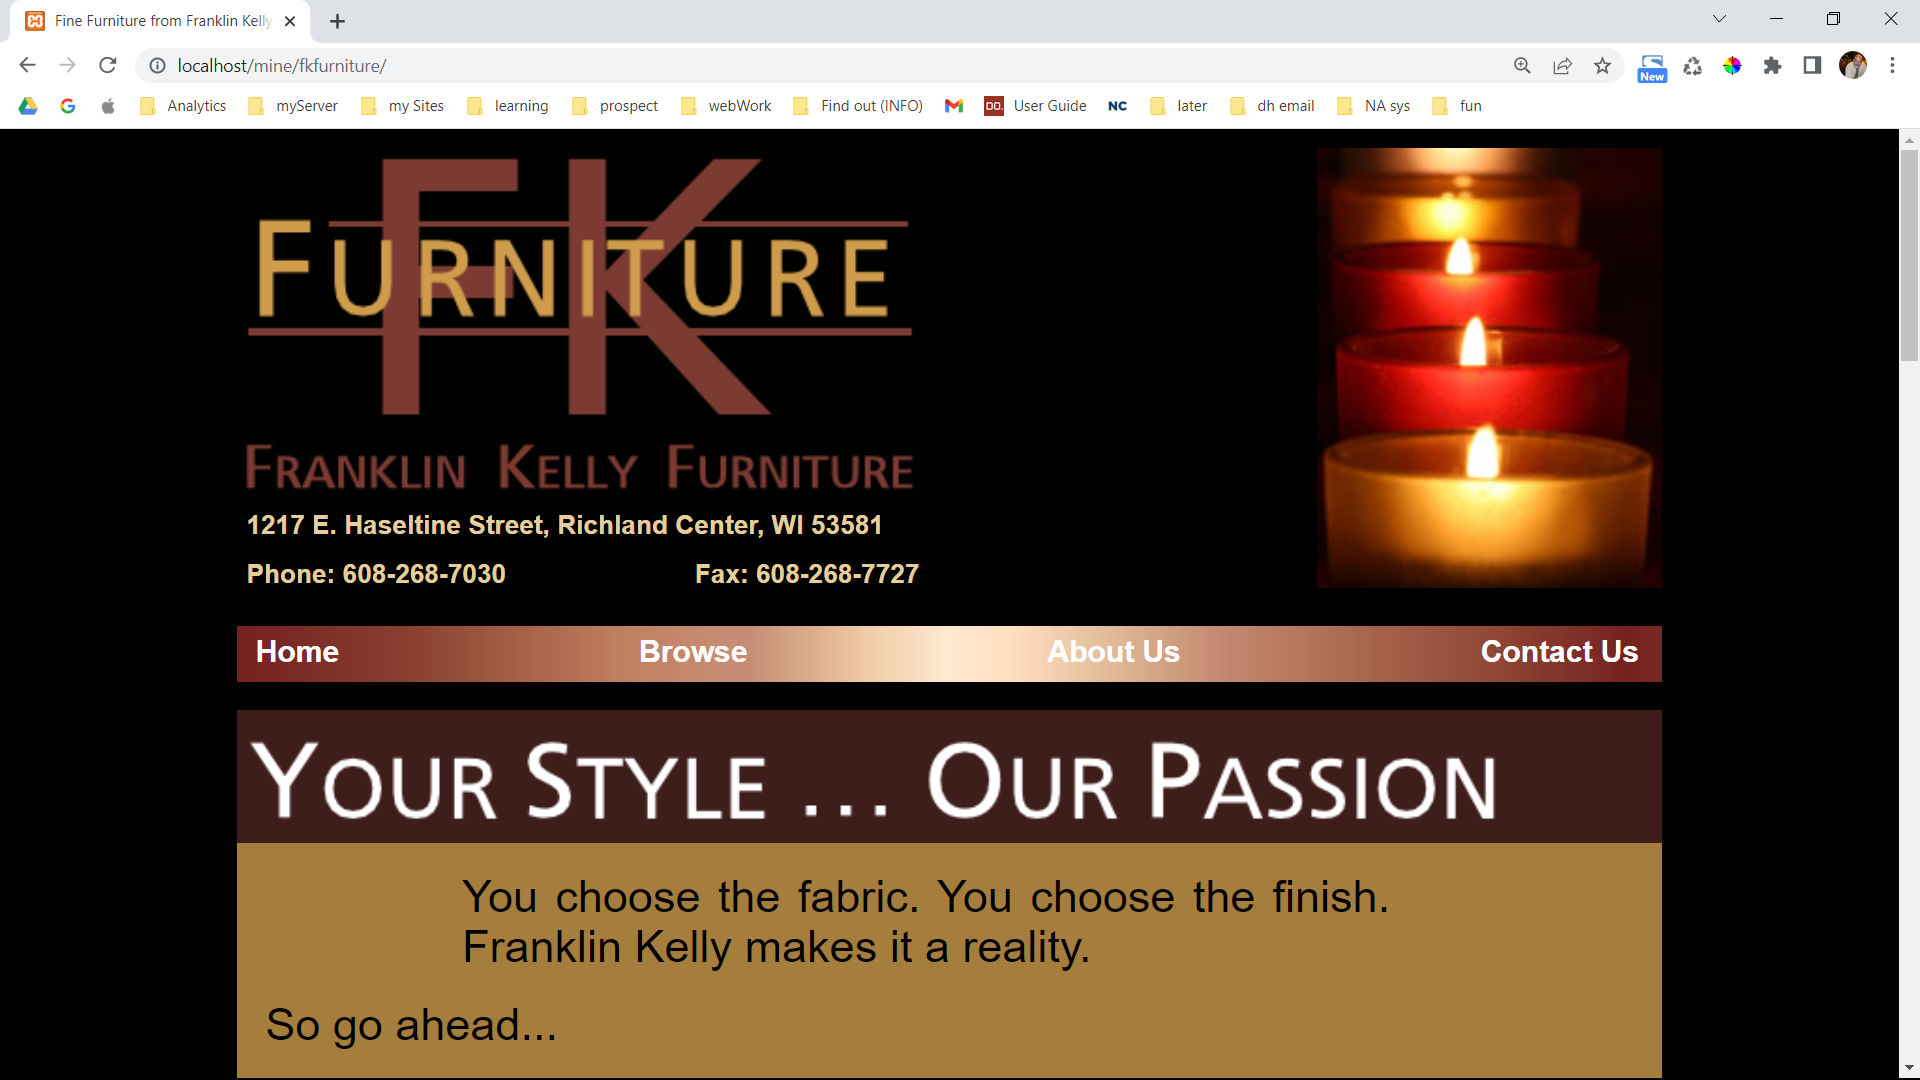 fkfurniture.com website